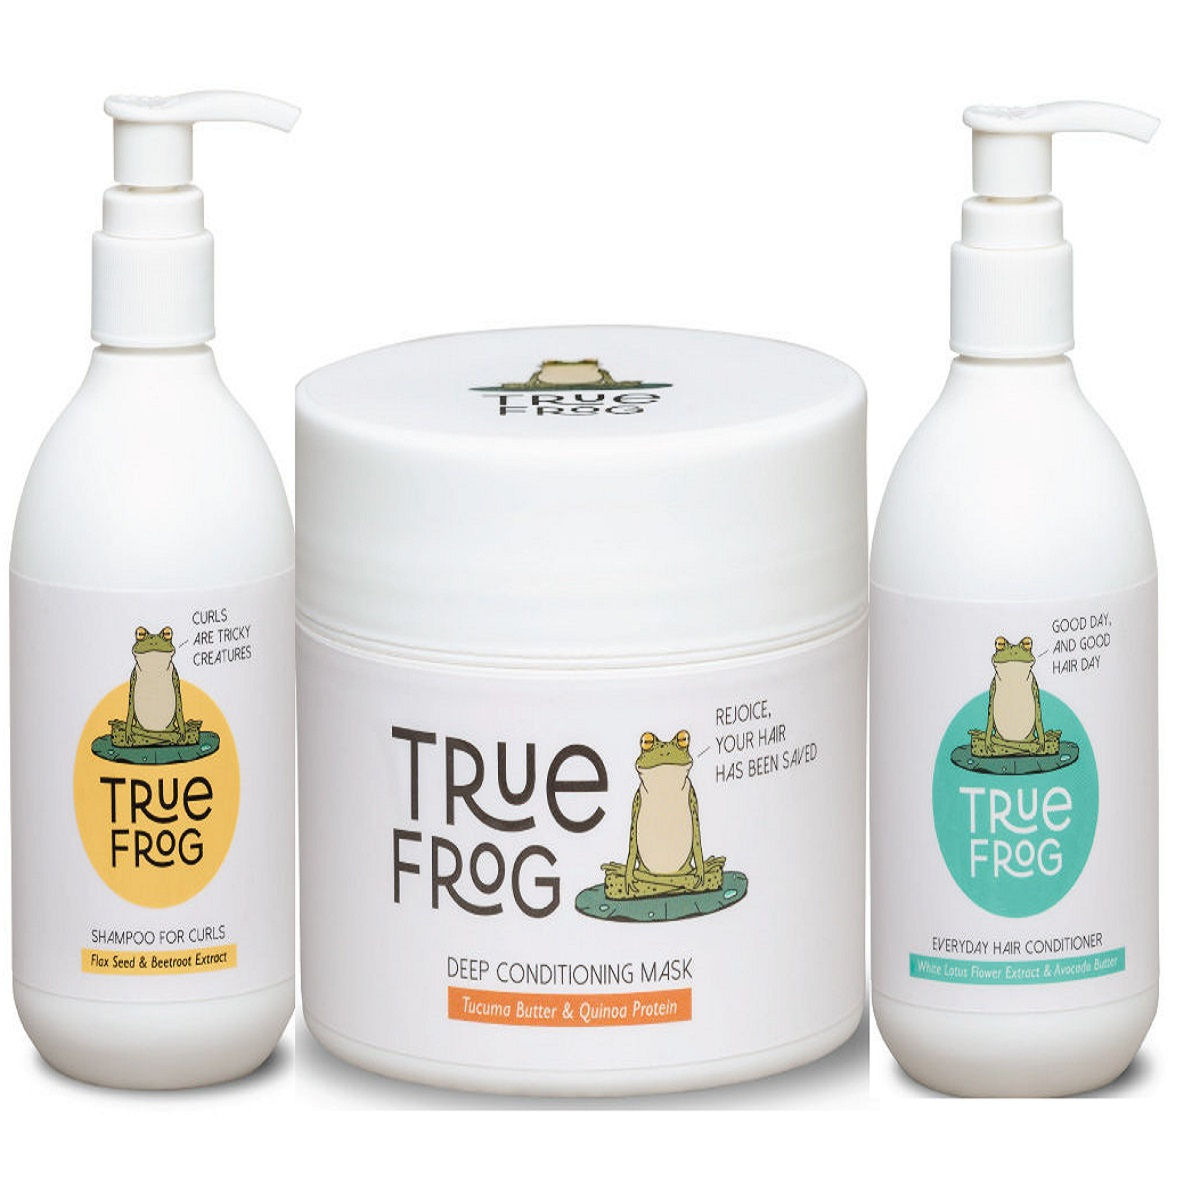 True Frog Shampoo For Curls + True Frog Everyday Hair Conditioner + True Frog Deep Conditioning Mask